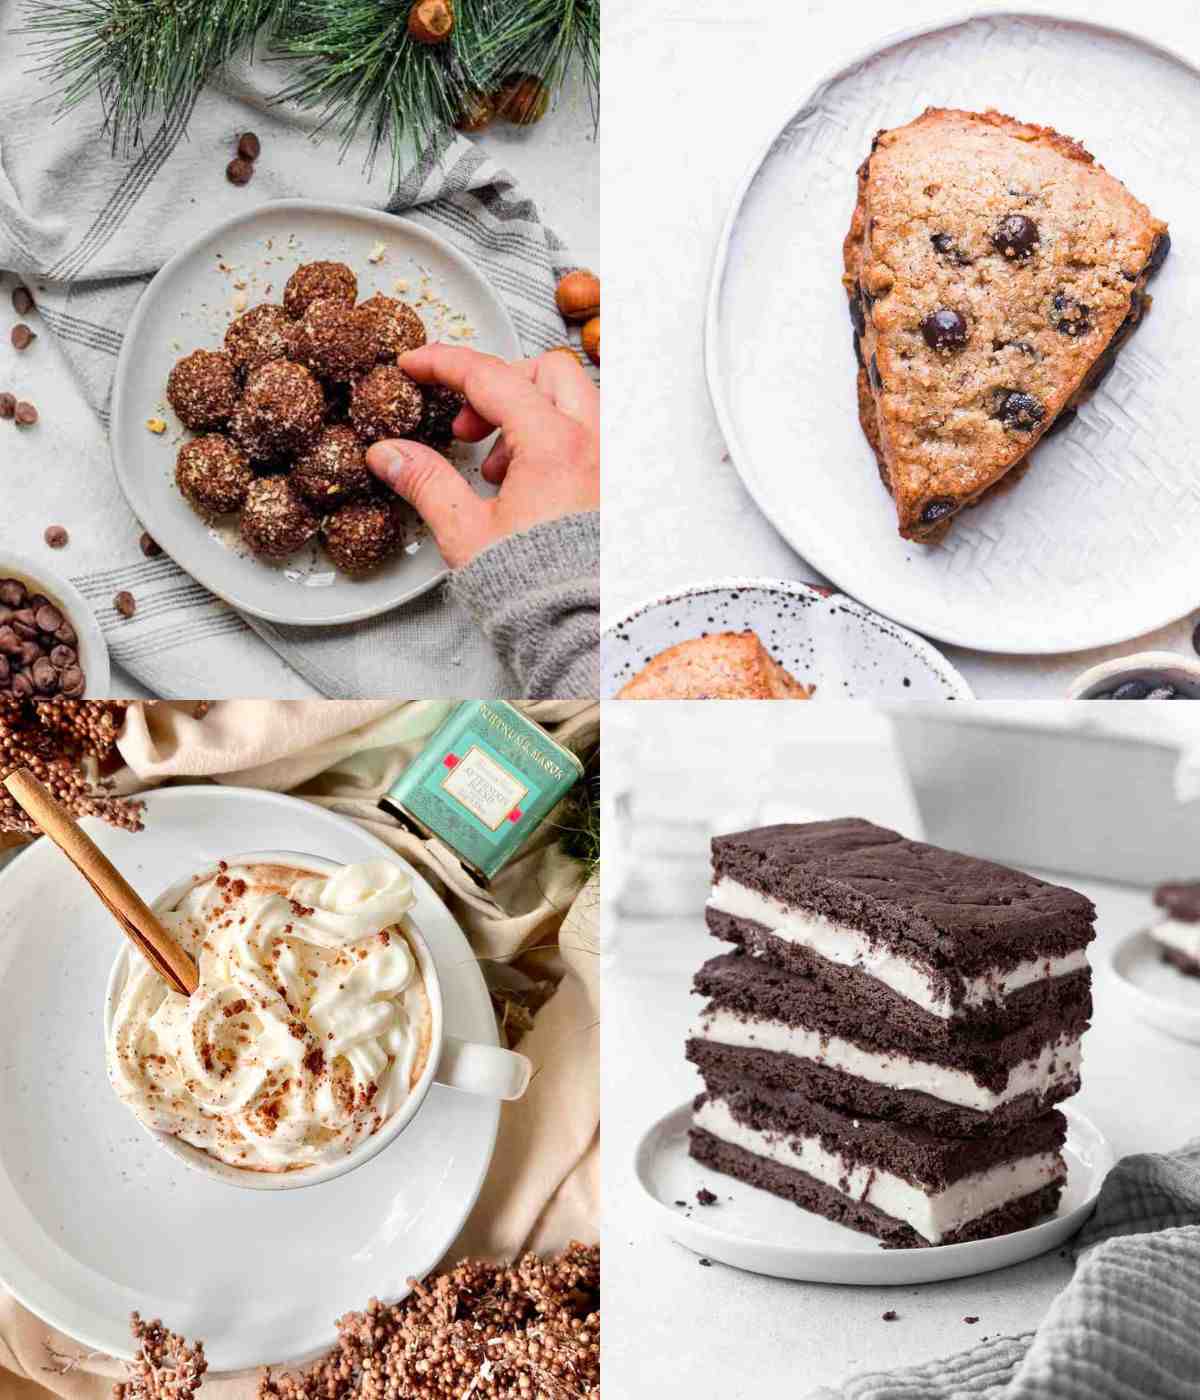 Four gluten-free desserts in a collage.